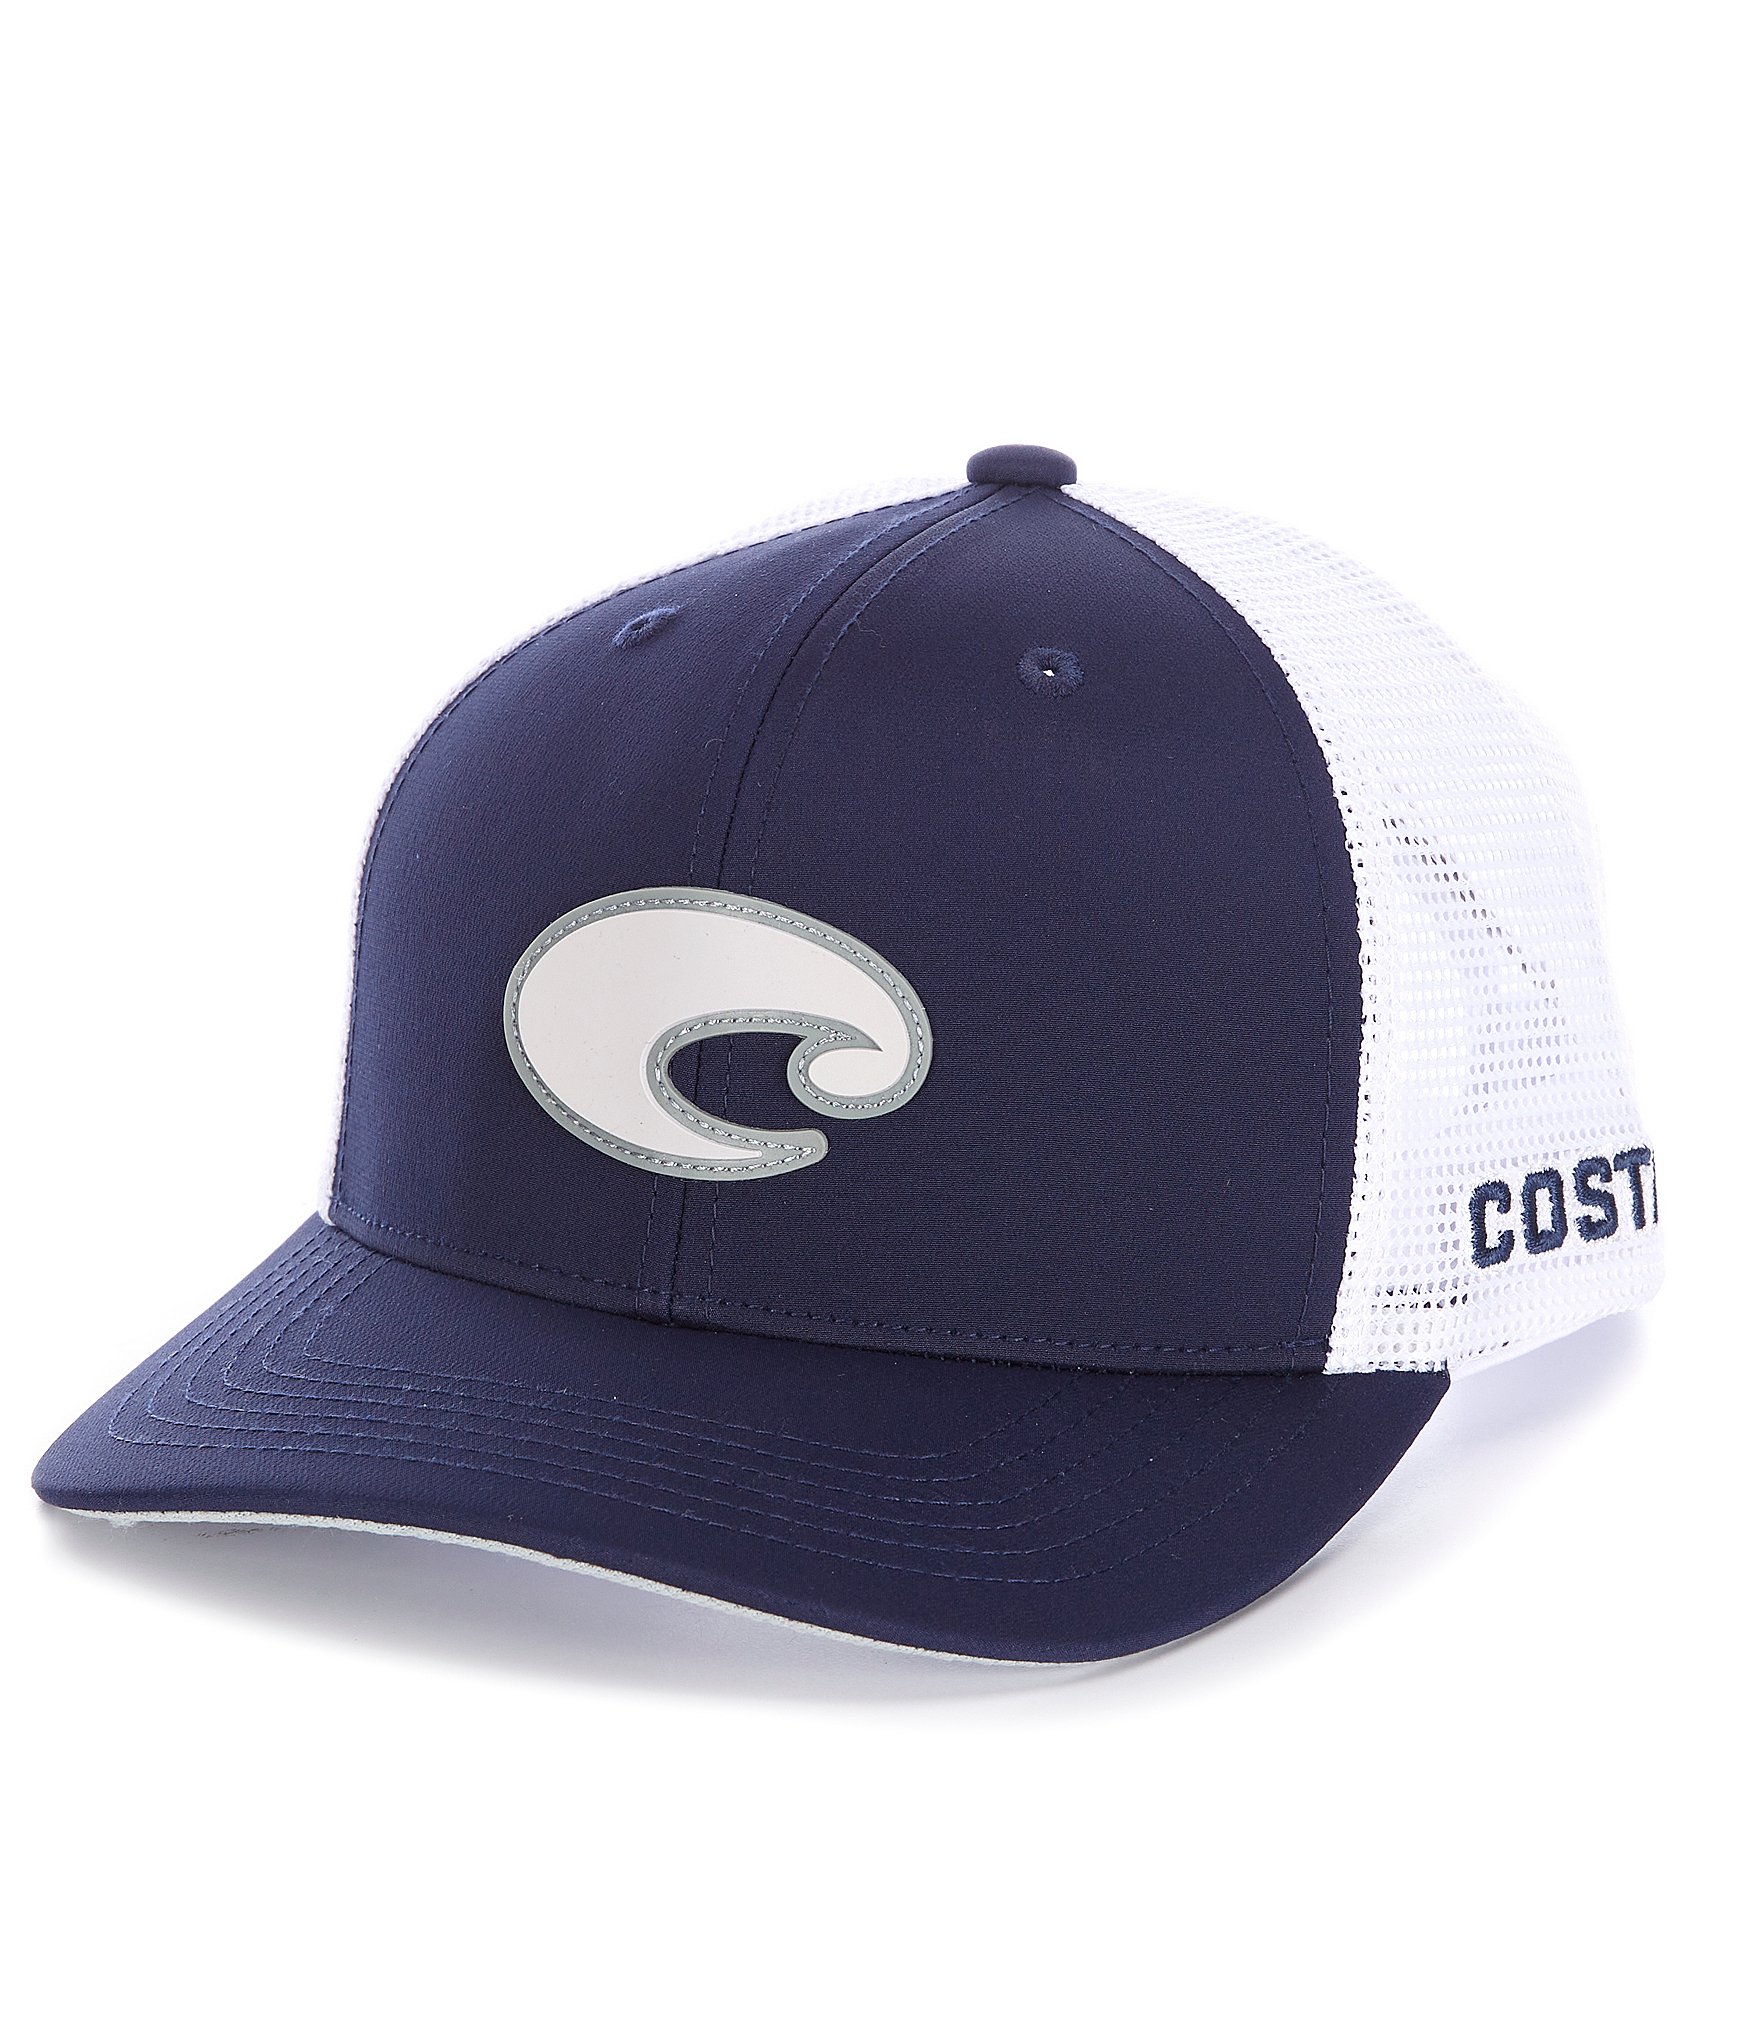 Costa Core Performance Trucker Hat - Navy